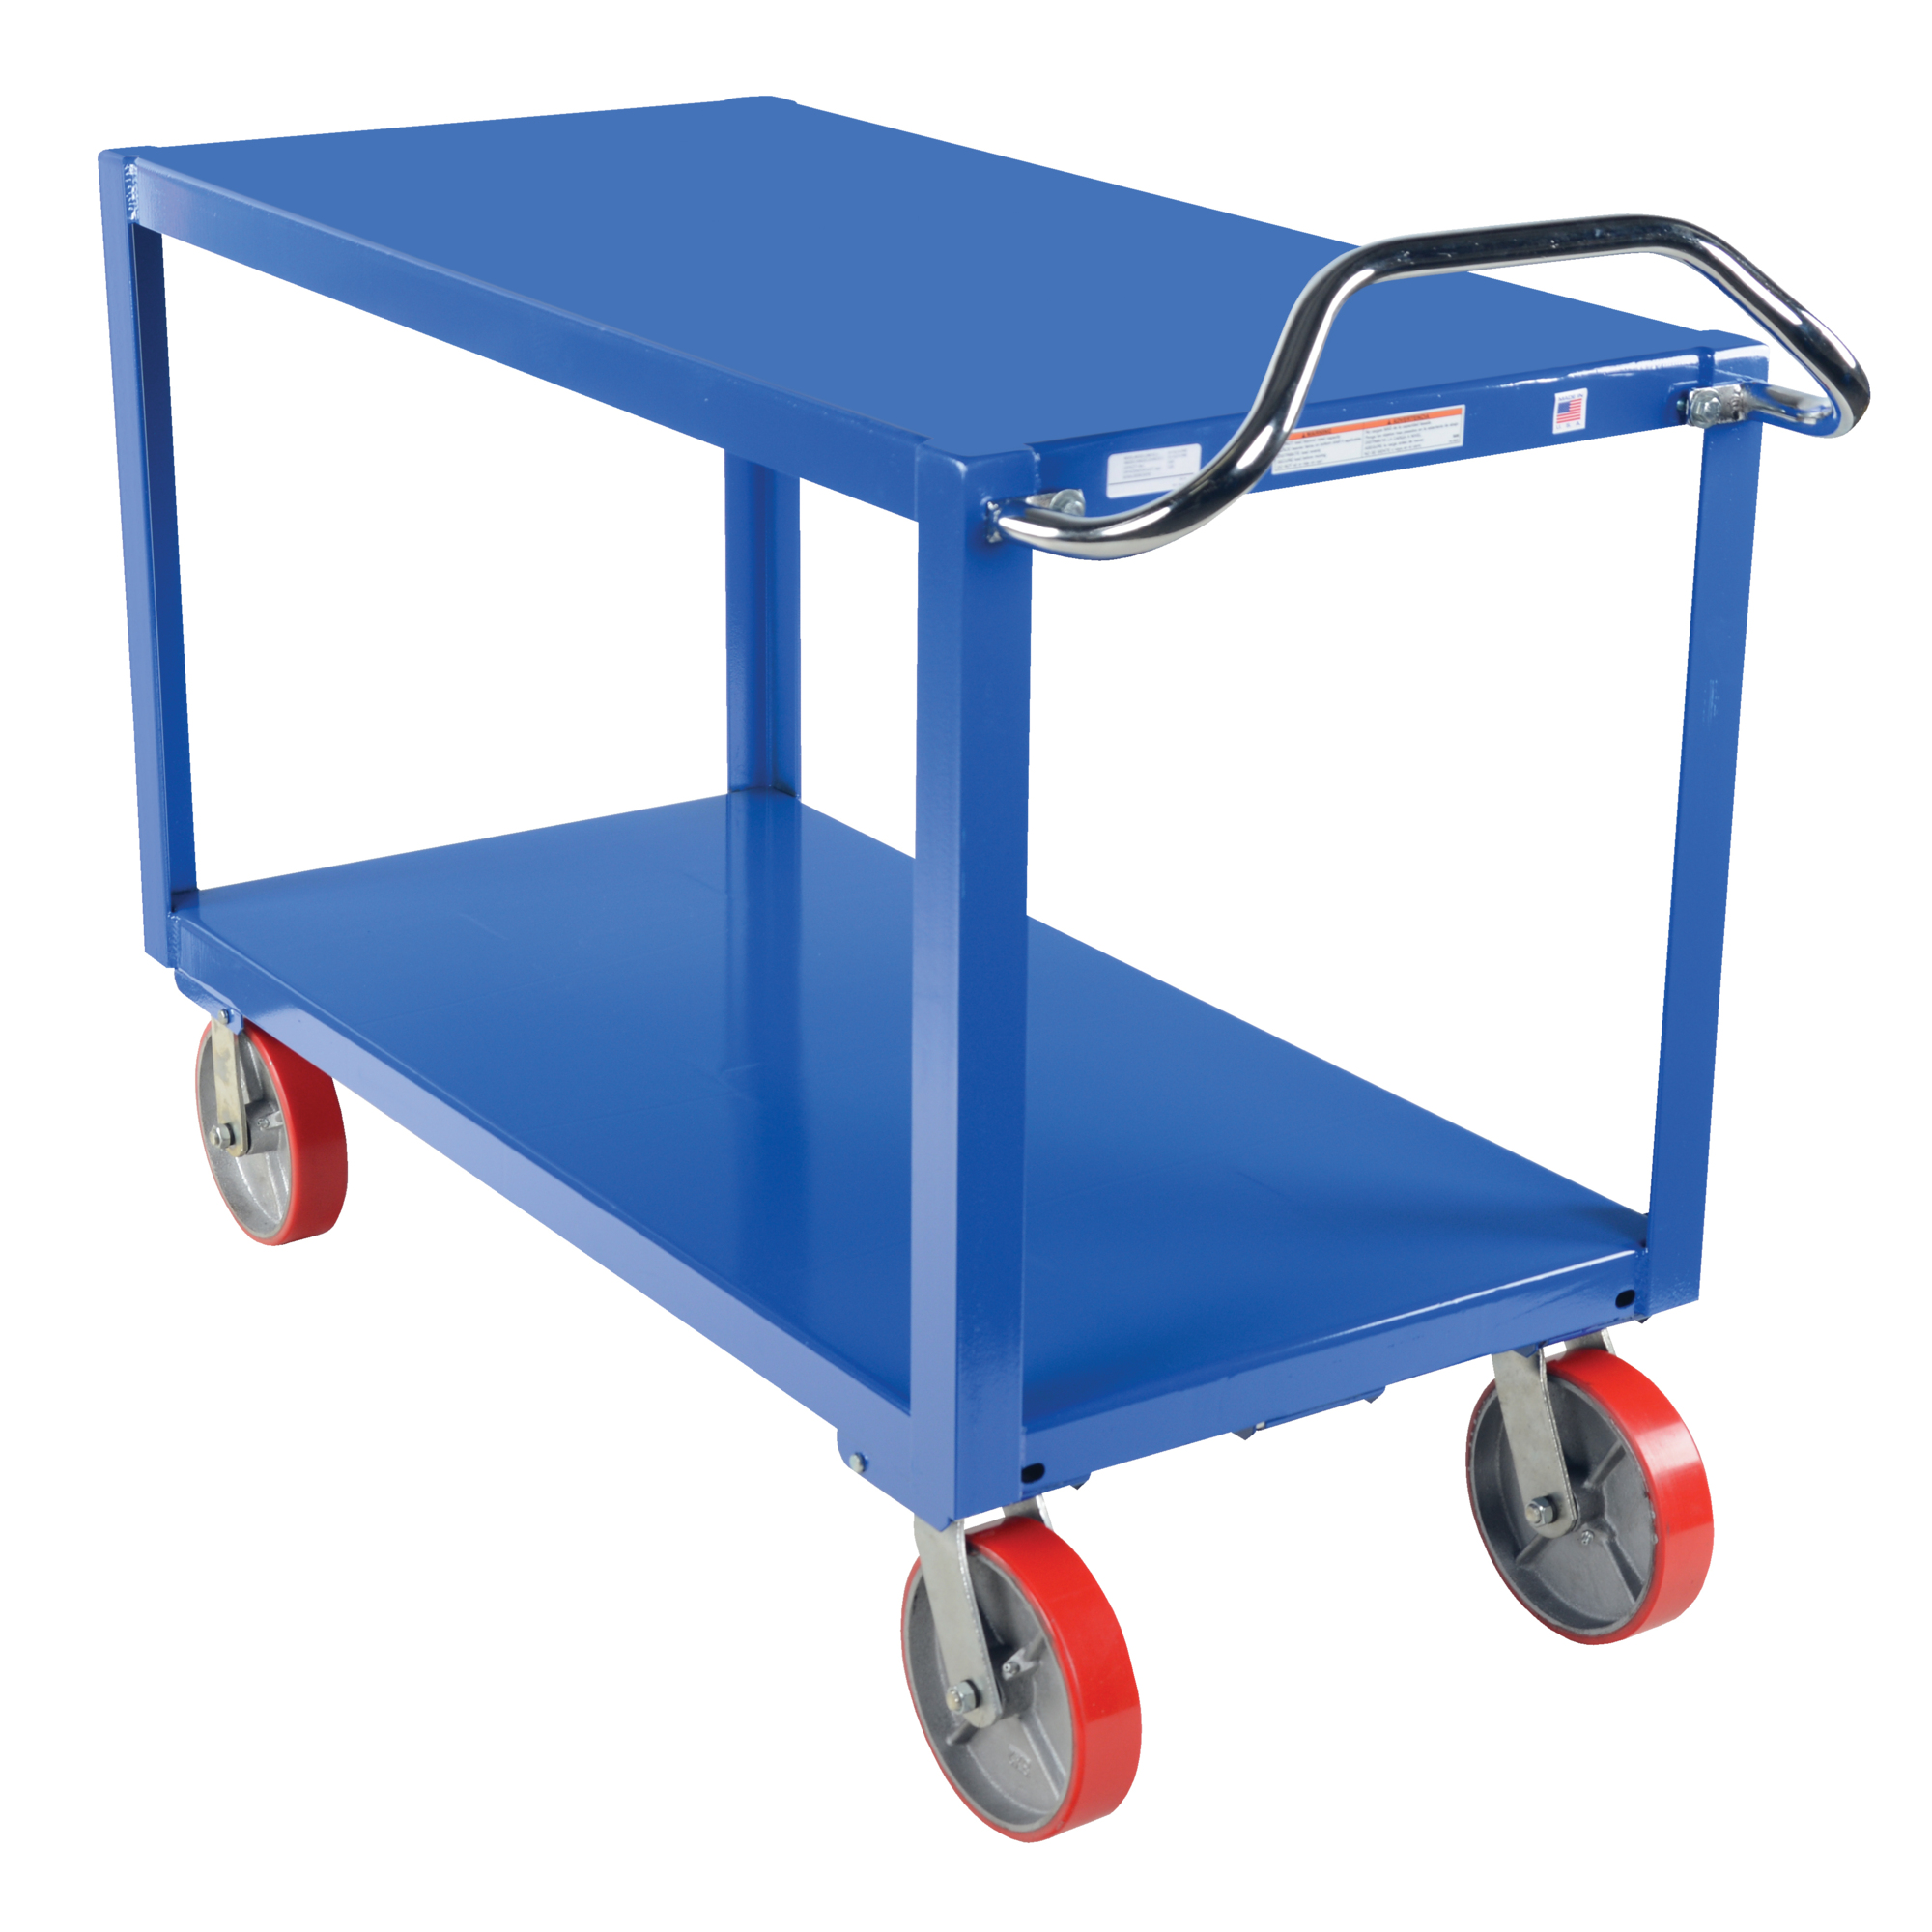 Vestil, Ergo handle cart with poly casters, Total Capacity 4000 lb, Shelves (qty.) 2 Model DH-PU2.4-3060